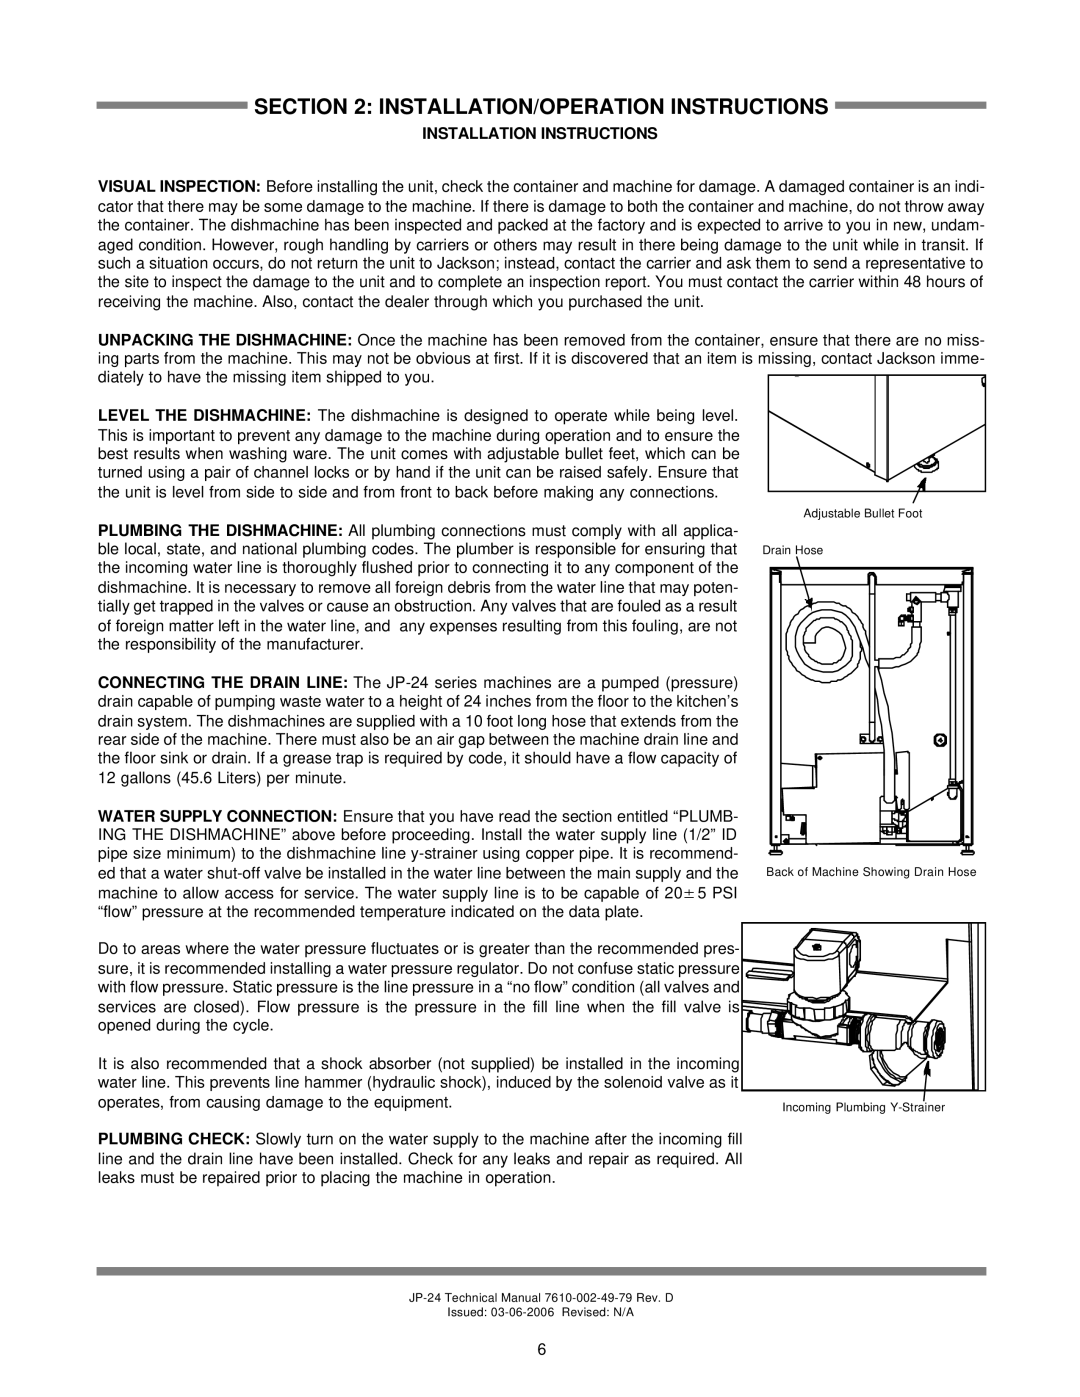 Jackson JP-24F, jp-24b, JP-24BF technical manual Installation/Operation Instructions, Installation Instructions 